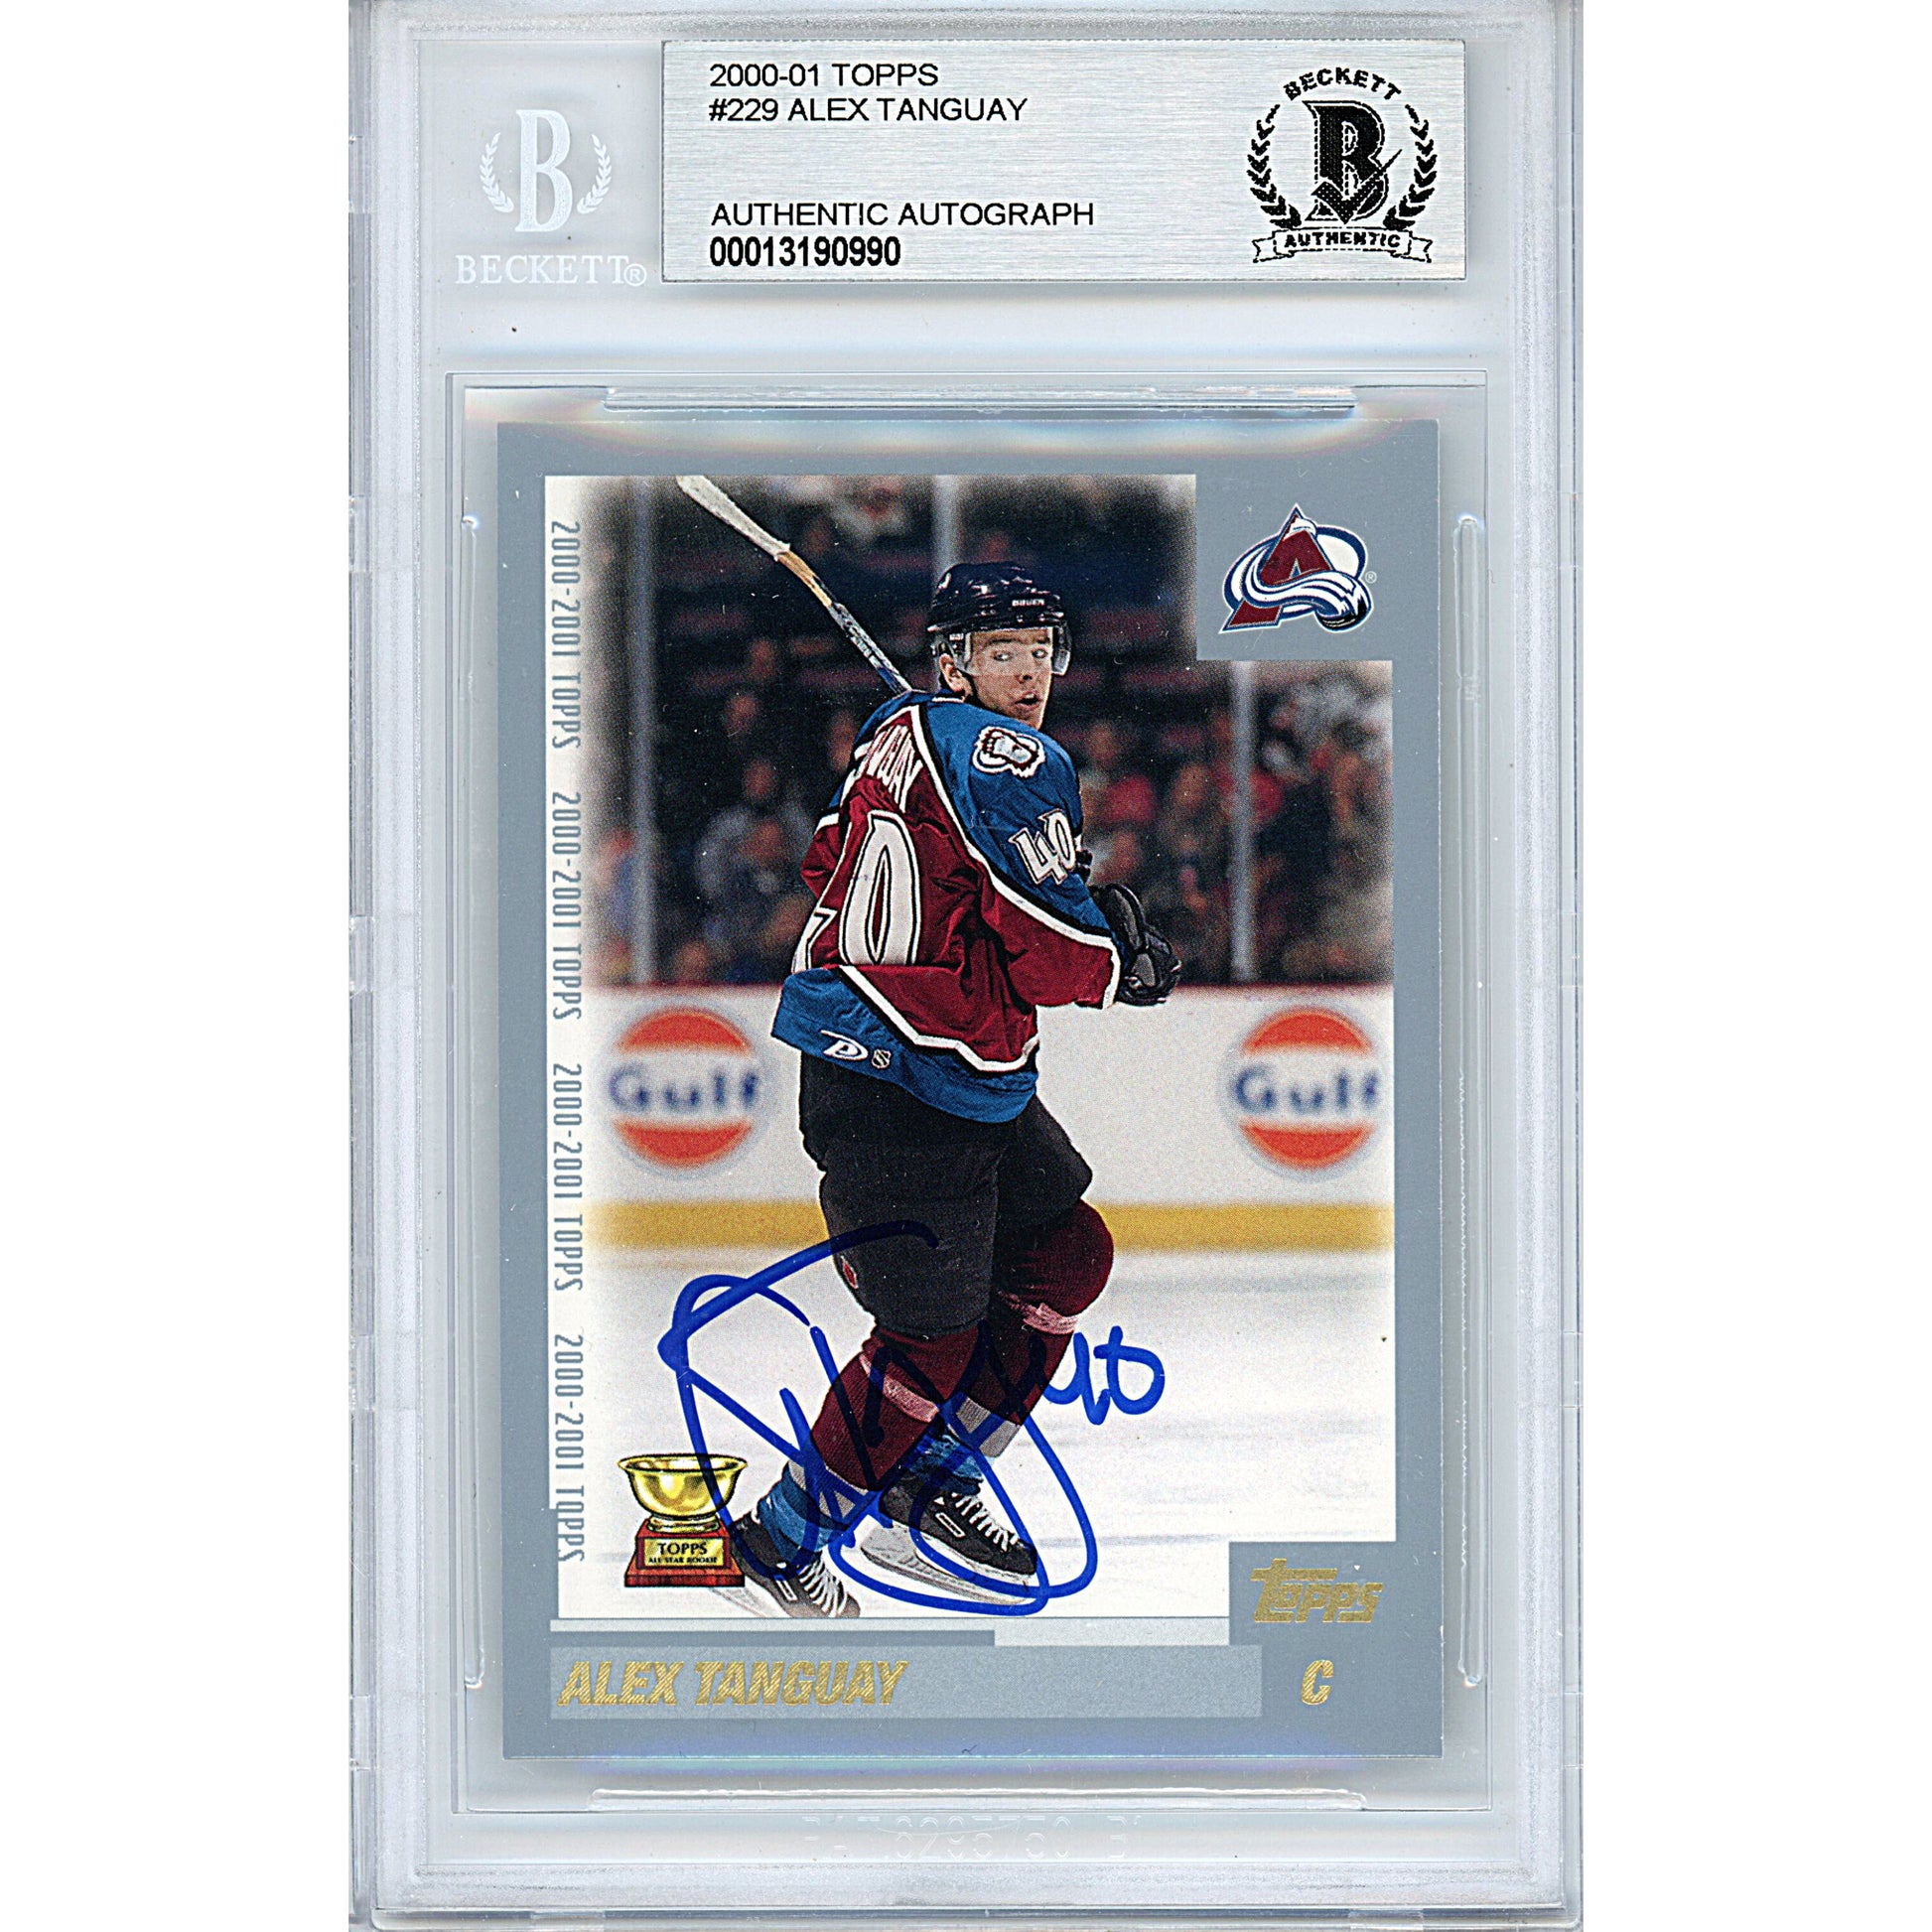 Hockey- Autographed- Alex Tanguay Signed Colorado Avalanche 2000-2001 Topps Hockey Card Beckett BAS Slabbed 00013190990 - 101